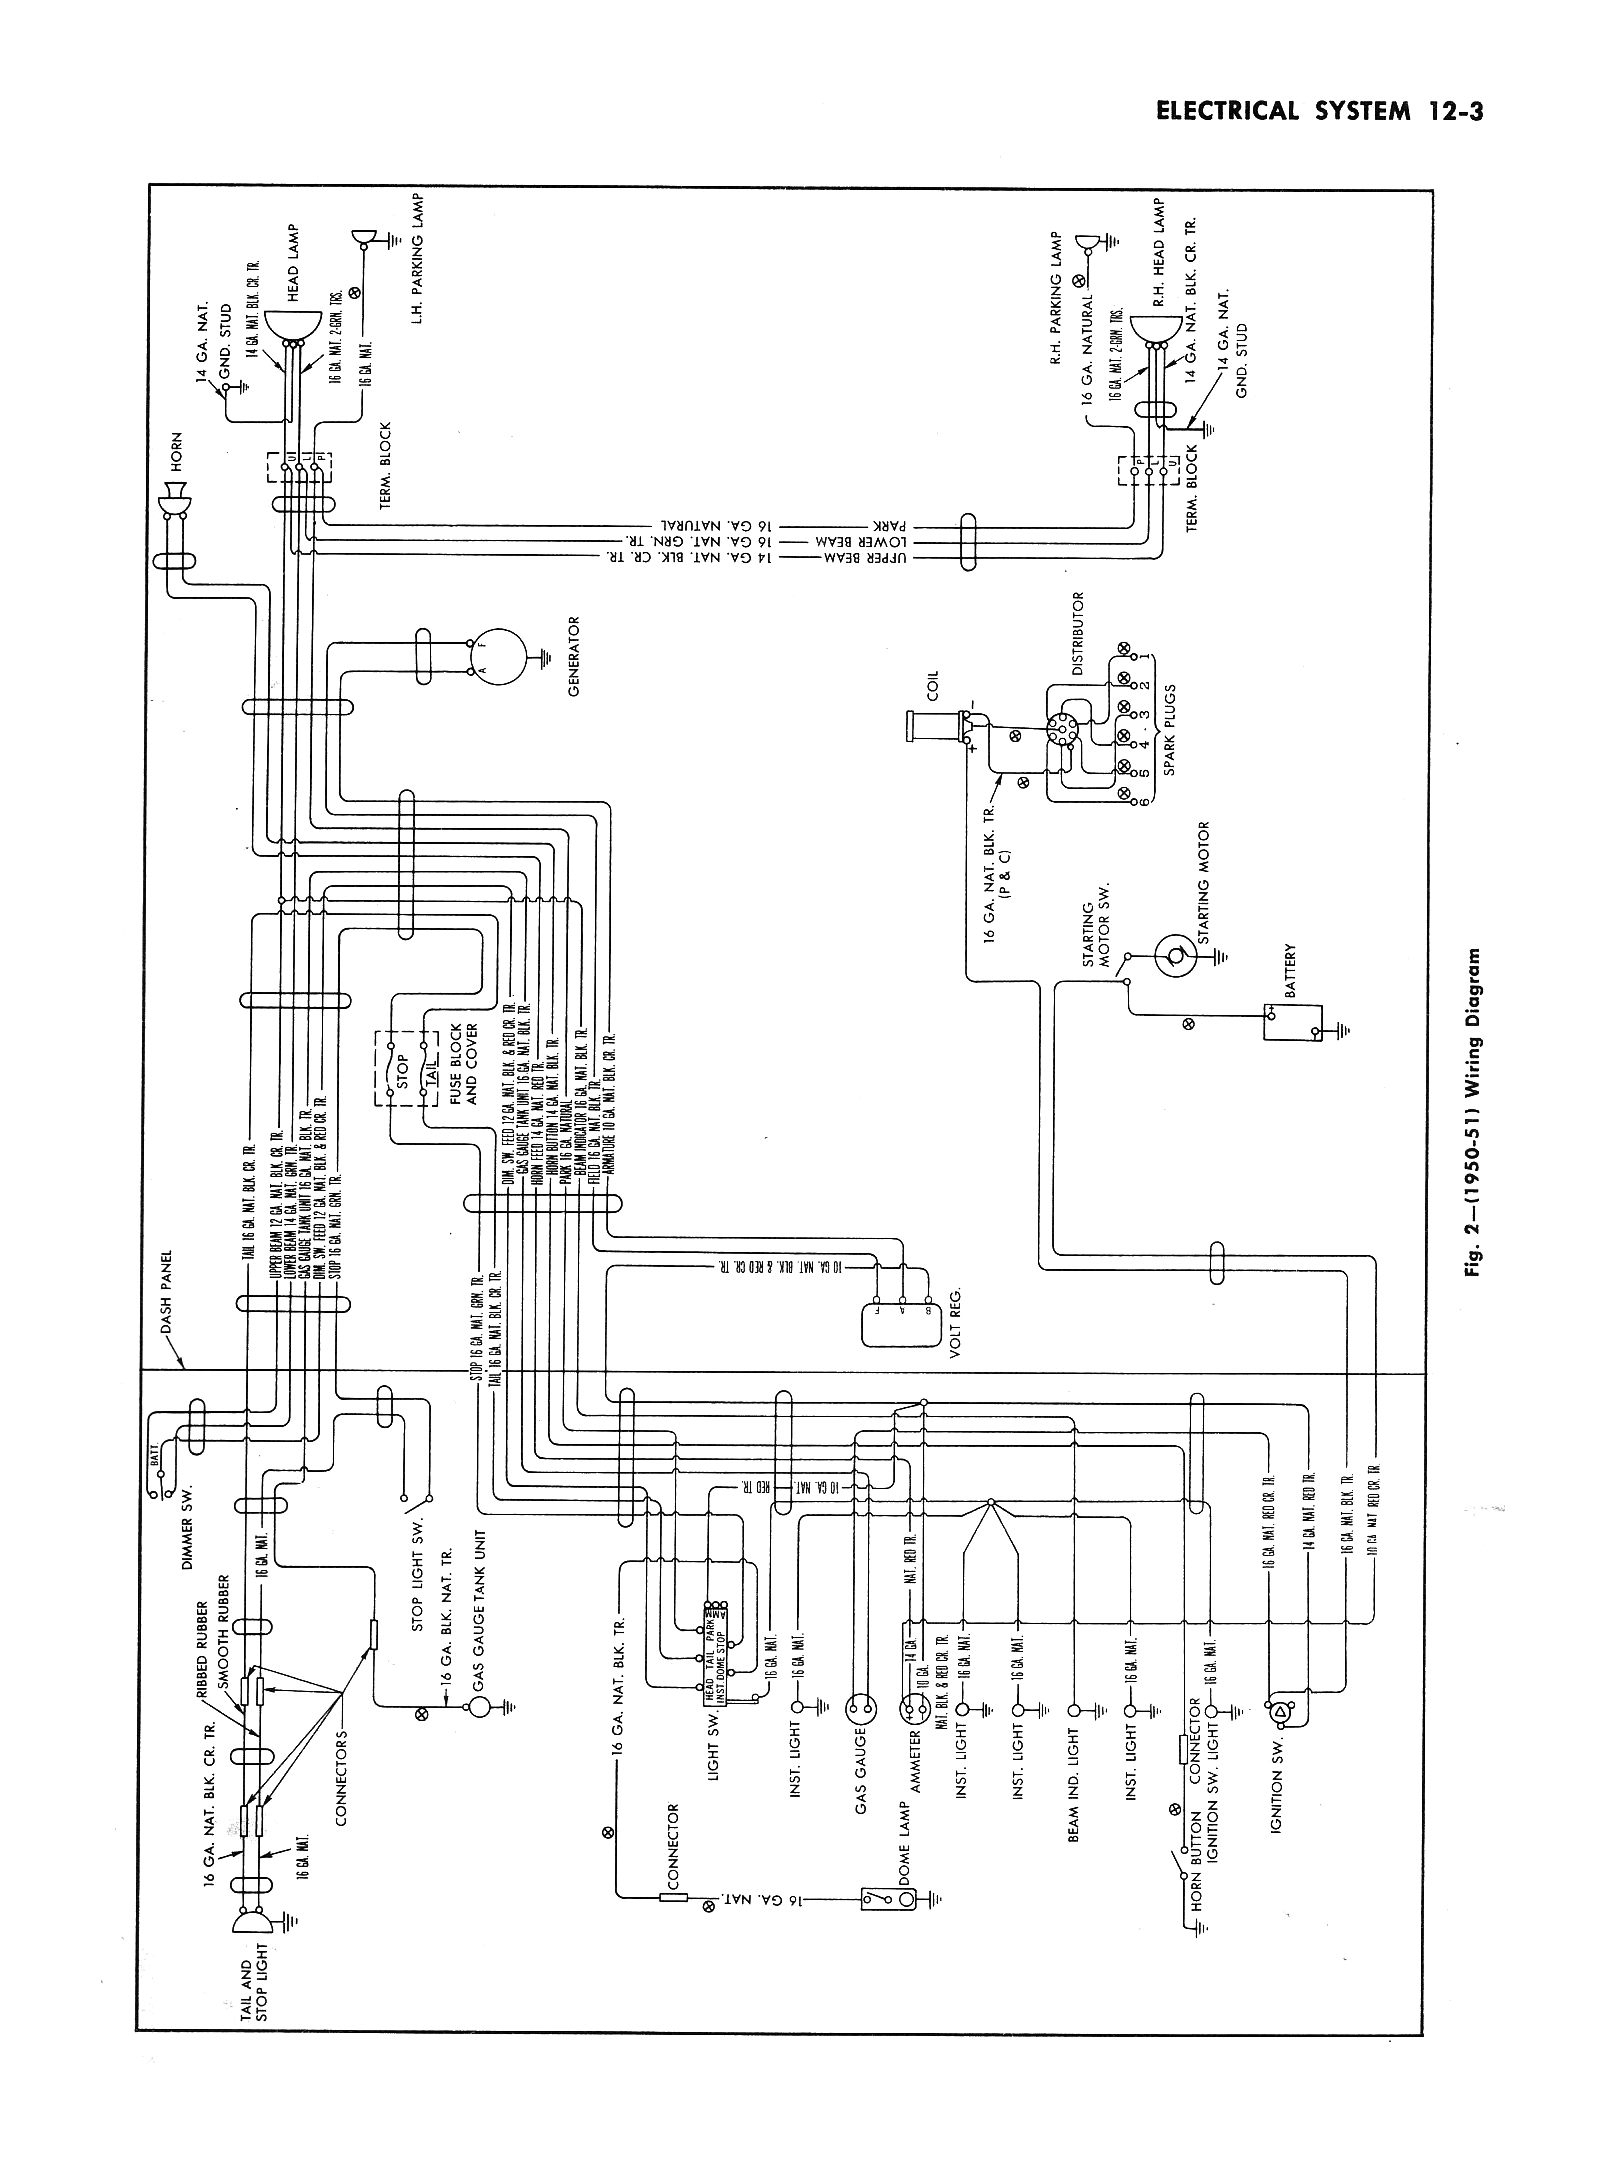 1952 Ford Wiring Diagram - Wiring Diagram Data Oreo - Chevy Alternator Wiring Diagram